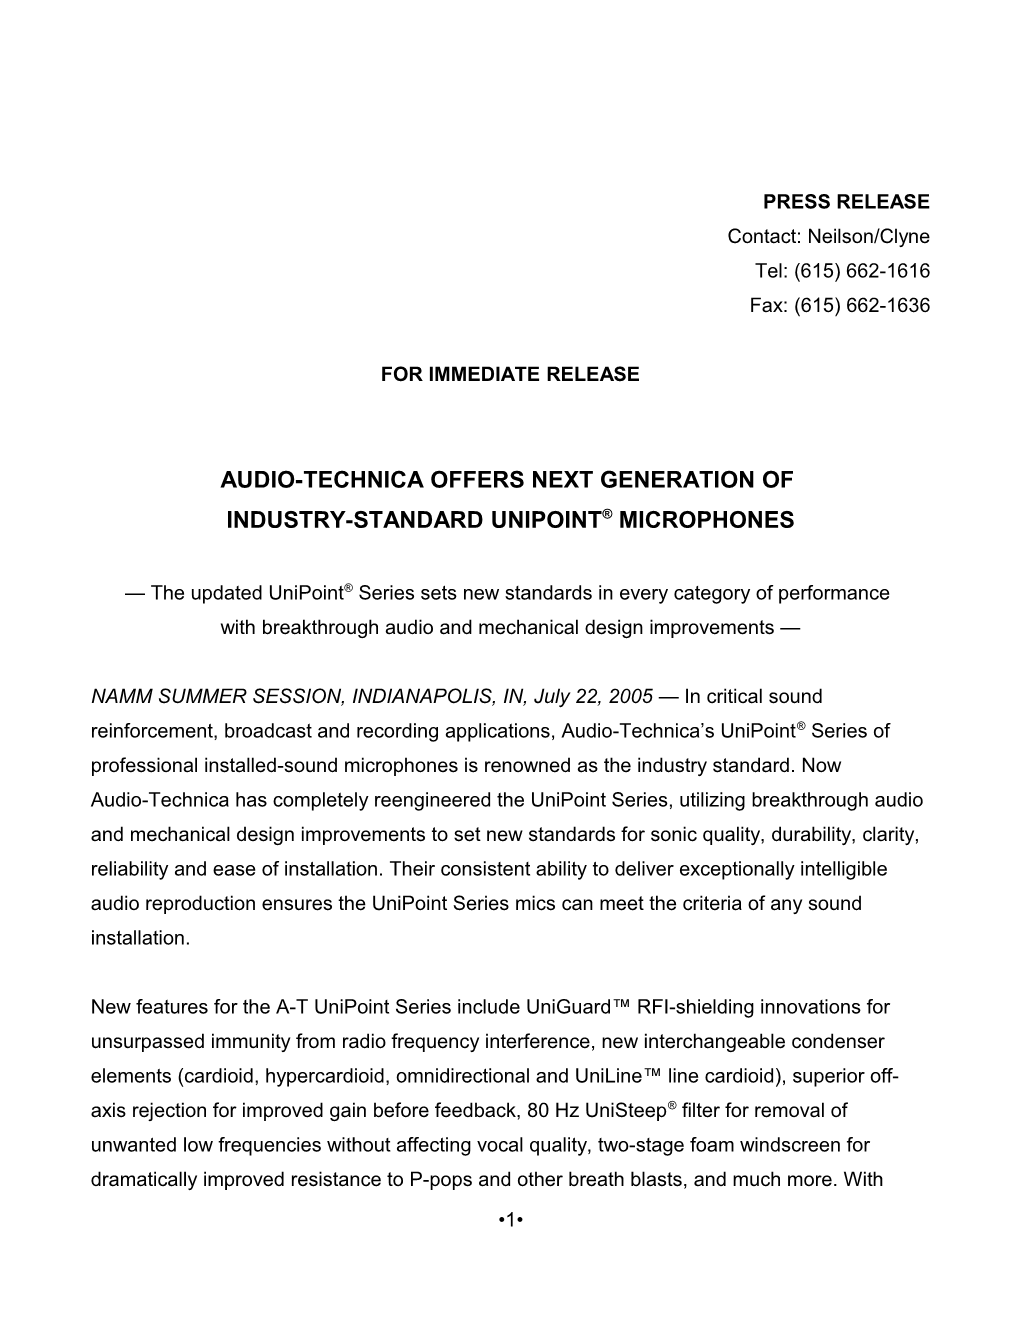 Audio-Technica Offers Next Generation Of